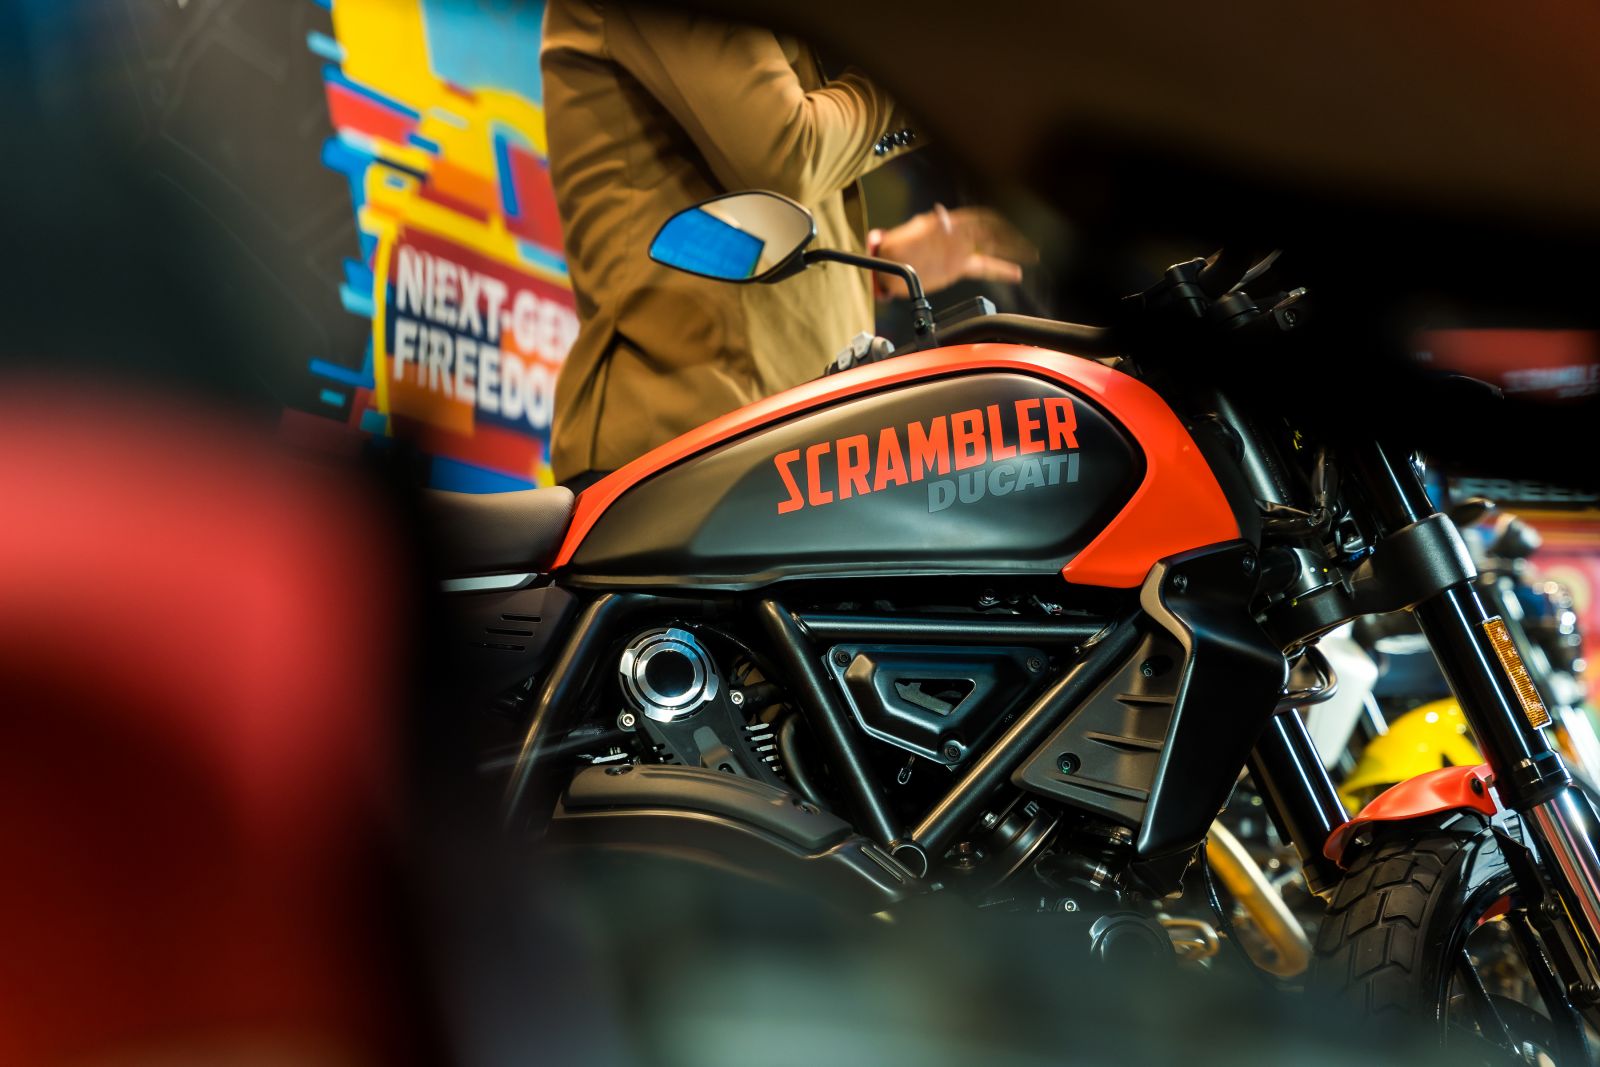 Scrambler Ducati thế hệ thứ 2